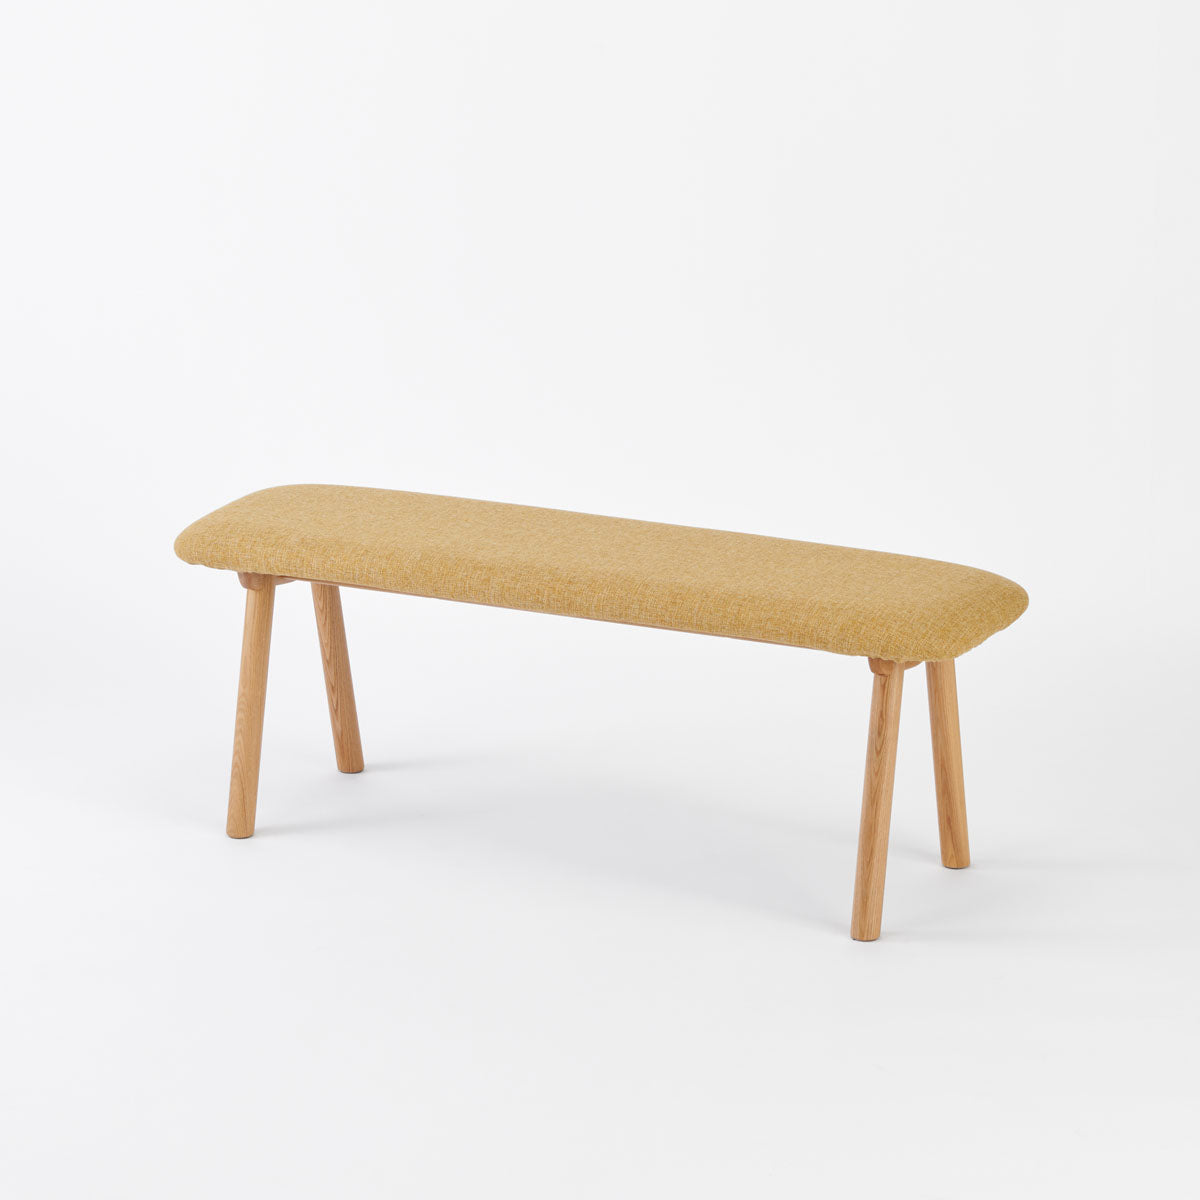 KUUM Bench - Natural Wooden Frame / クーム ベンチイエロー